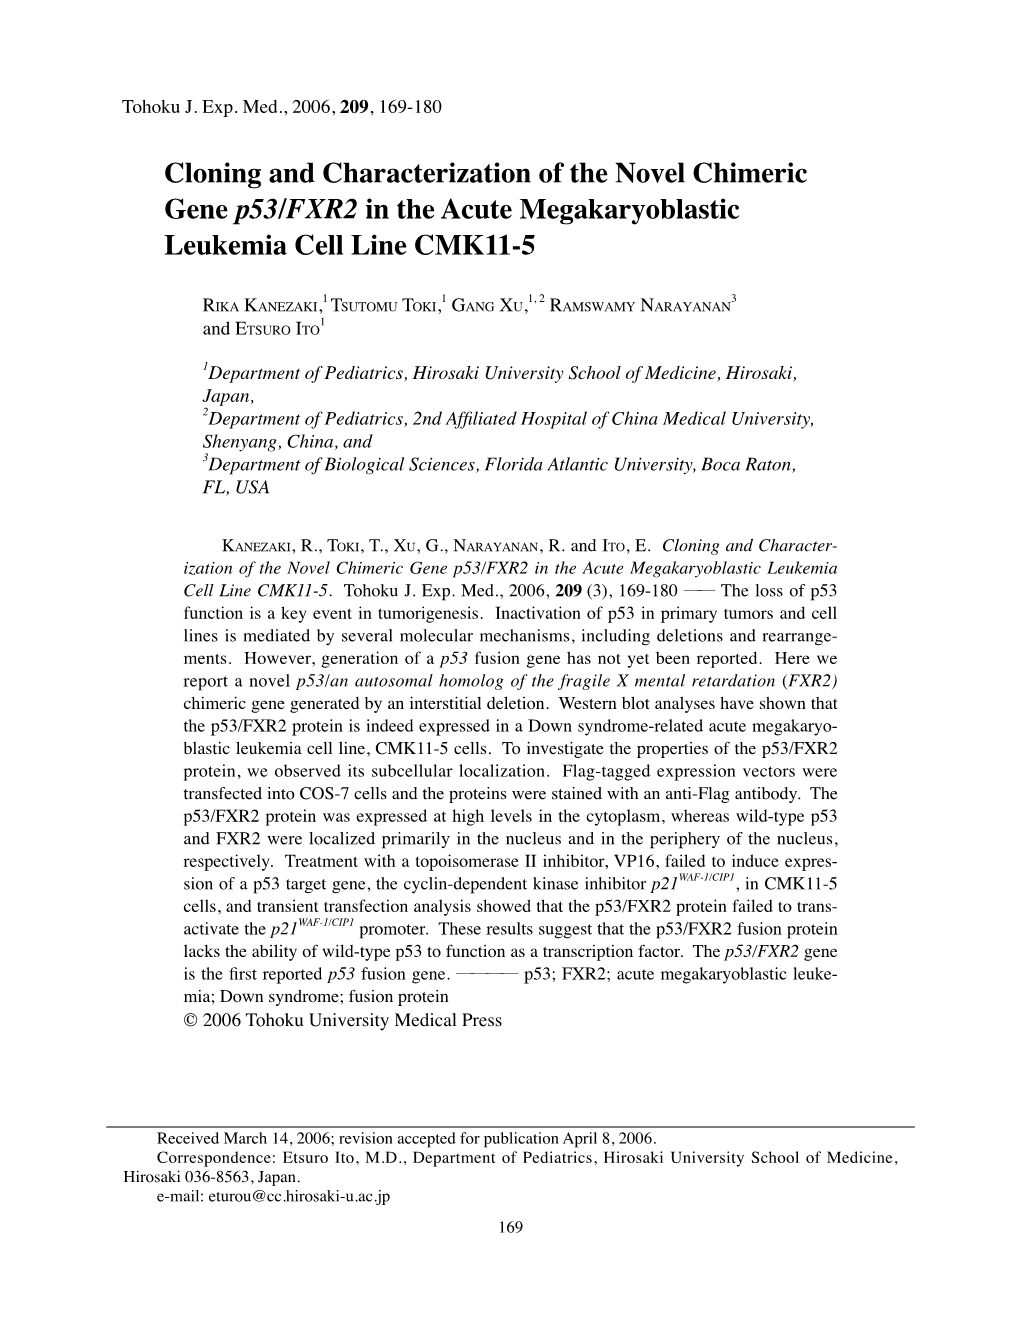 Cloning and Characterization of the Novel Chimeric Gene P53/FXR2 in the Acute Megakaryoblastic Leukemia Cell Line CMK11-5